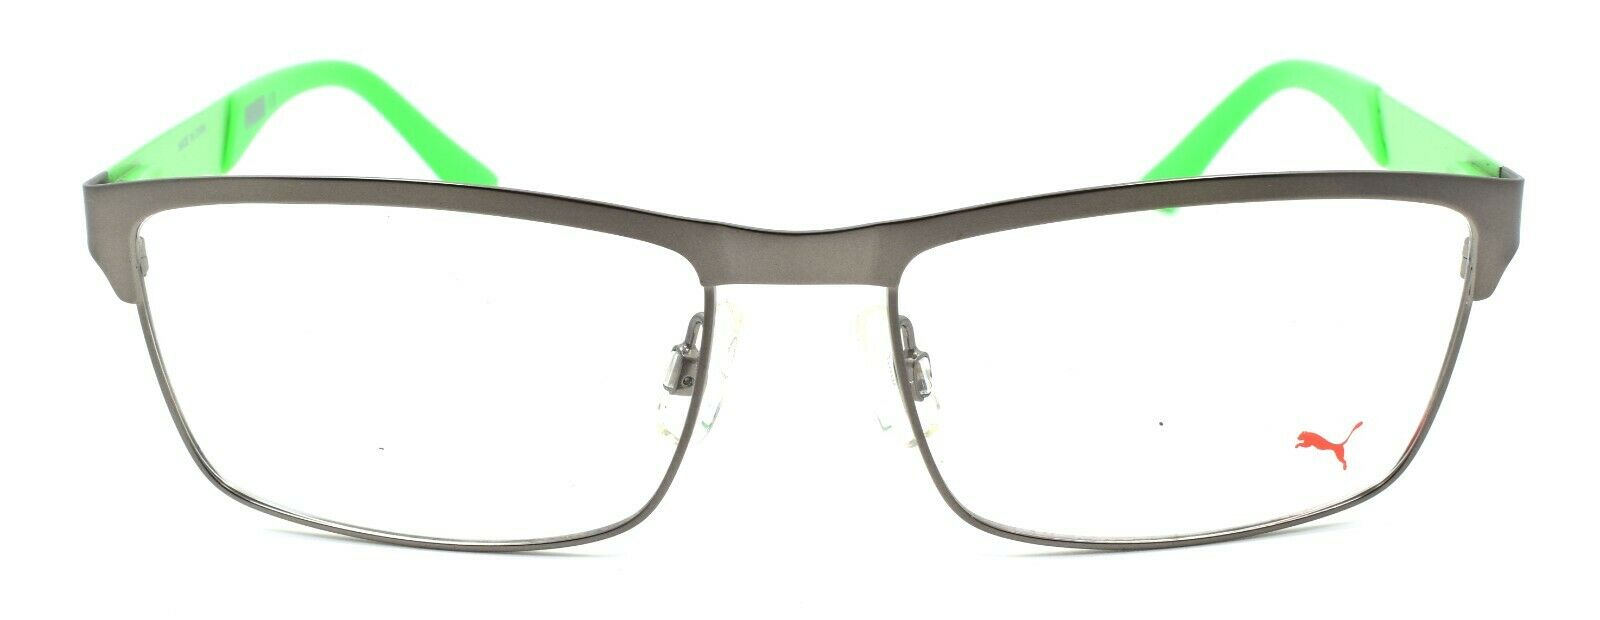 2-PUMA PE0011O 008 Men's Eyeglasses Frames 56-17-140 Ruthenium / Green-889652034478-IKSpecs